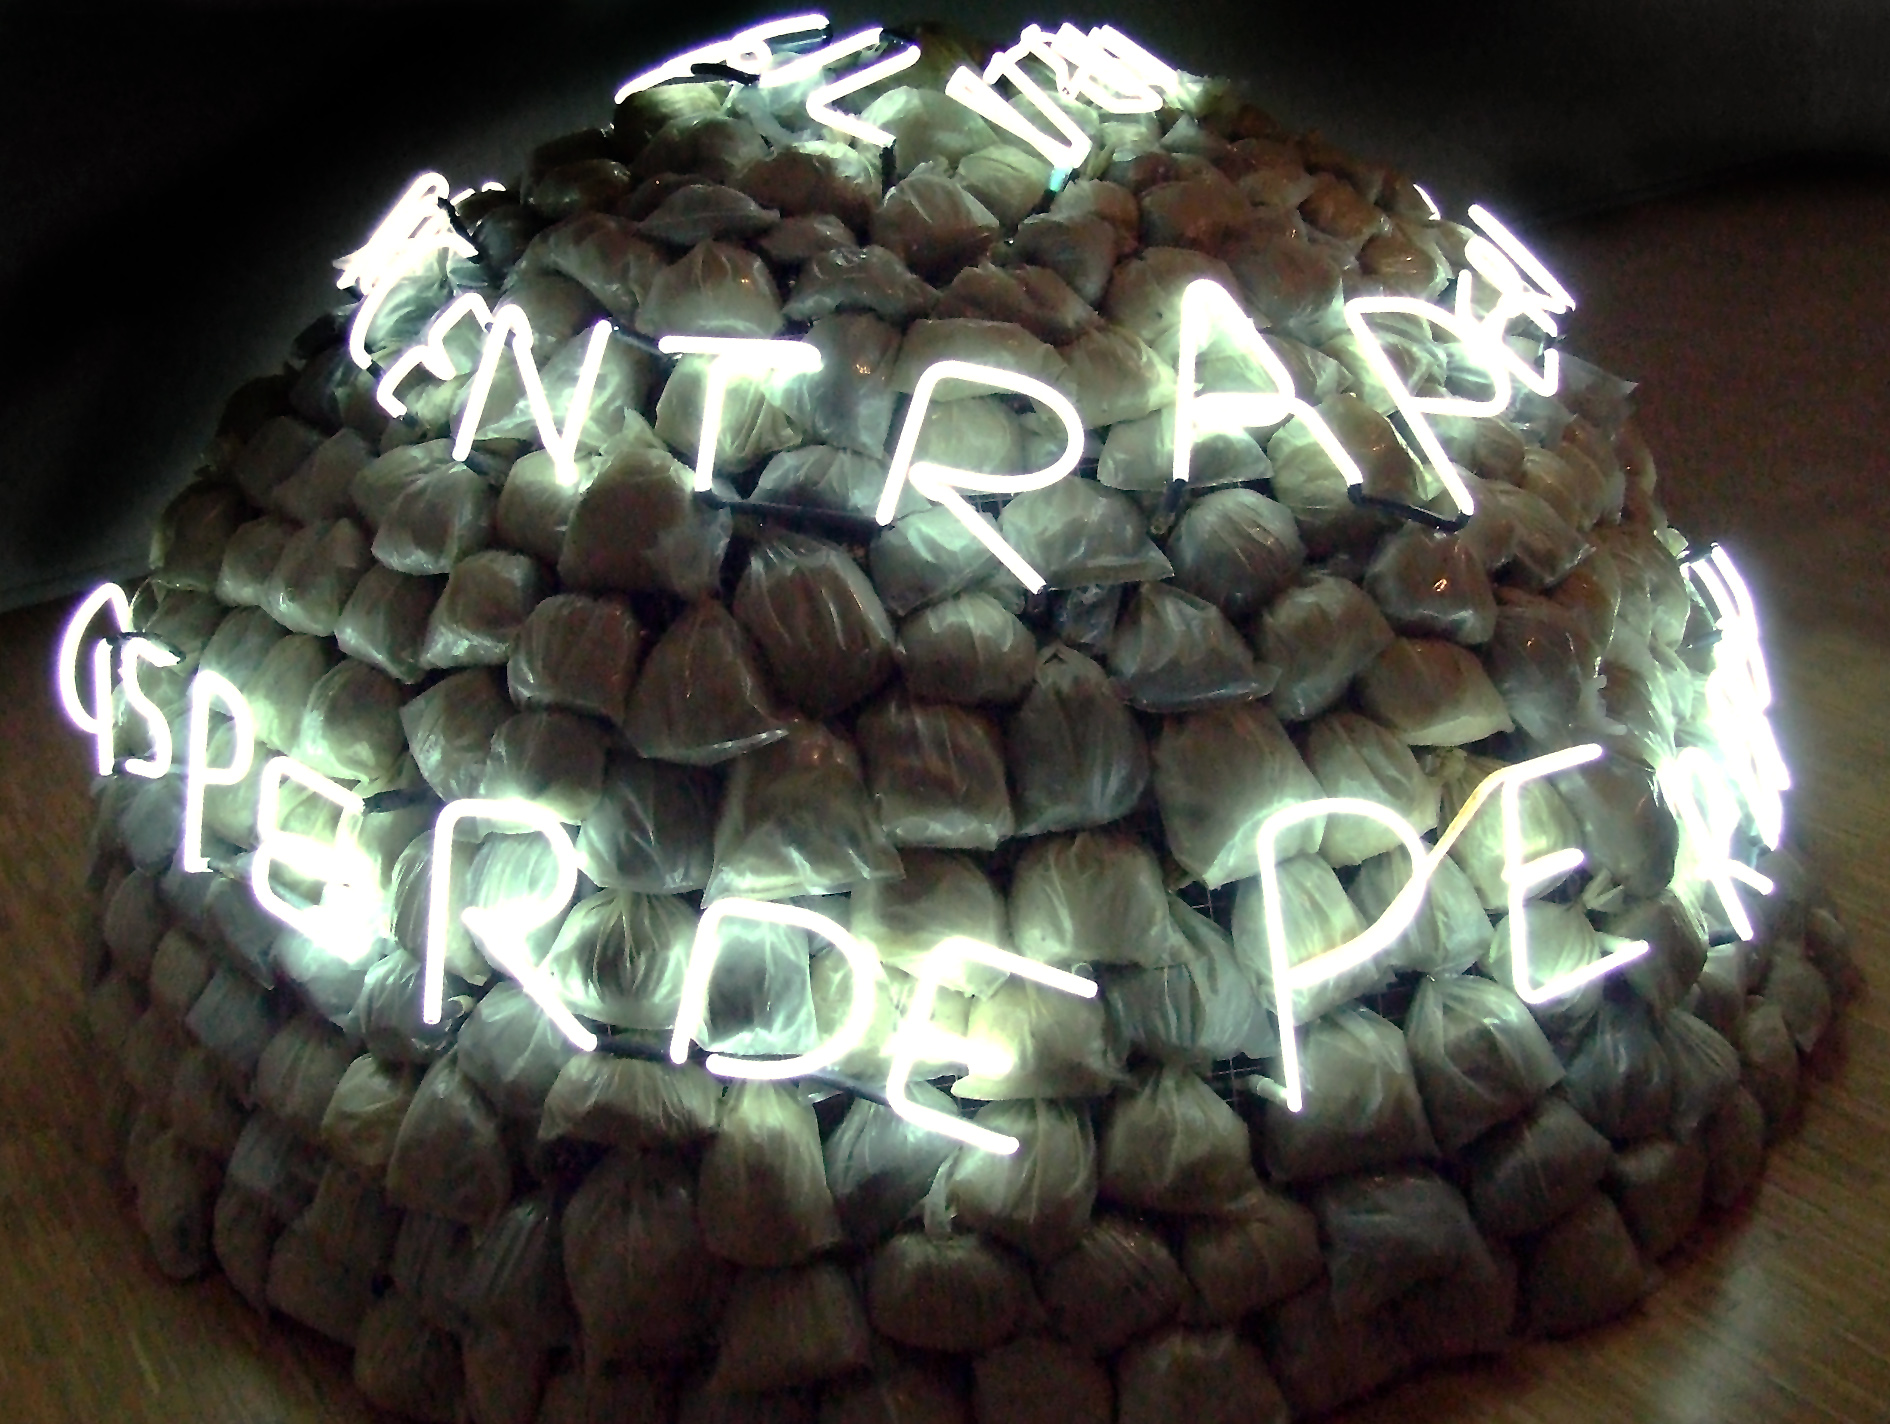 Mario Merz, Igloo di Giap (Giap’s Igloo), 1968, metal structure, wire mesh, bags of clay soil, neon, batteries, accumulators, 120 x 200 cm (Centre Georges Pompidou, Paris